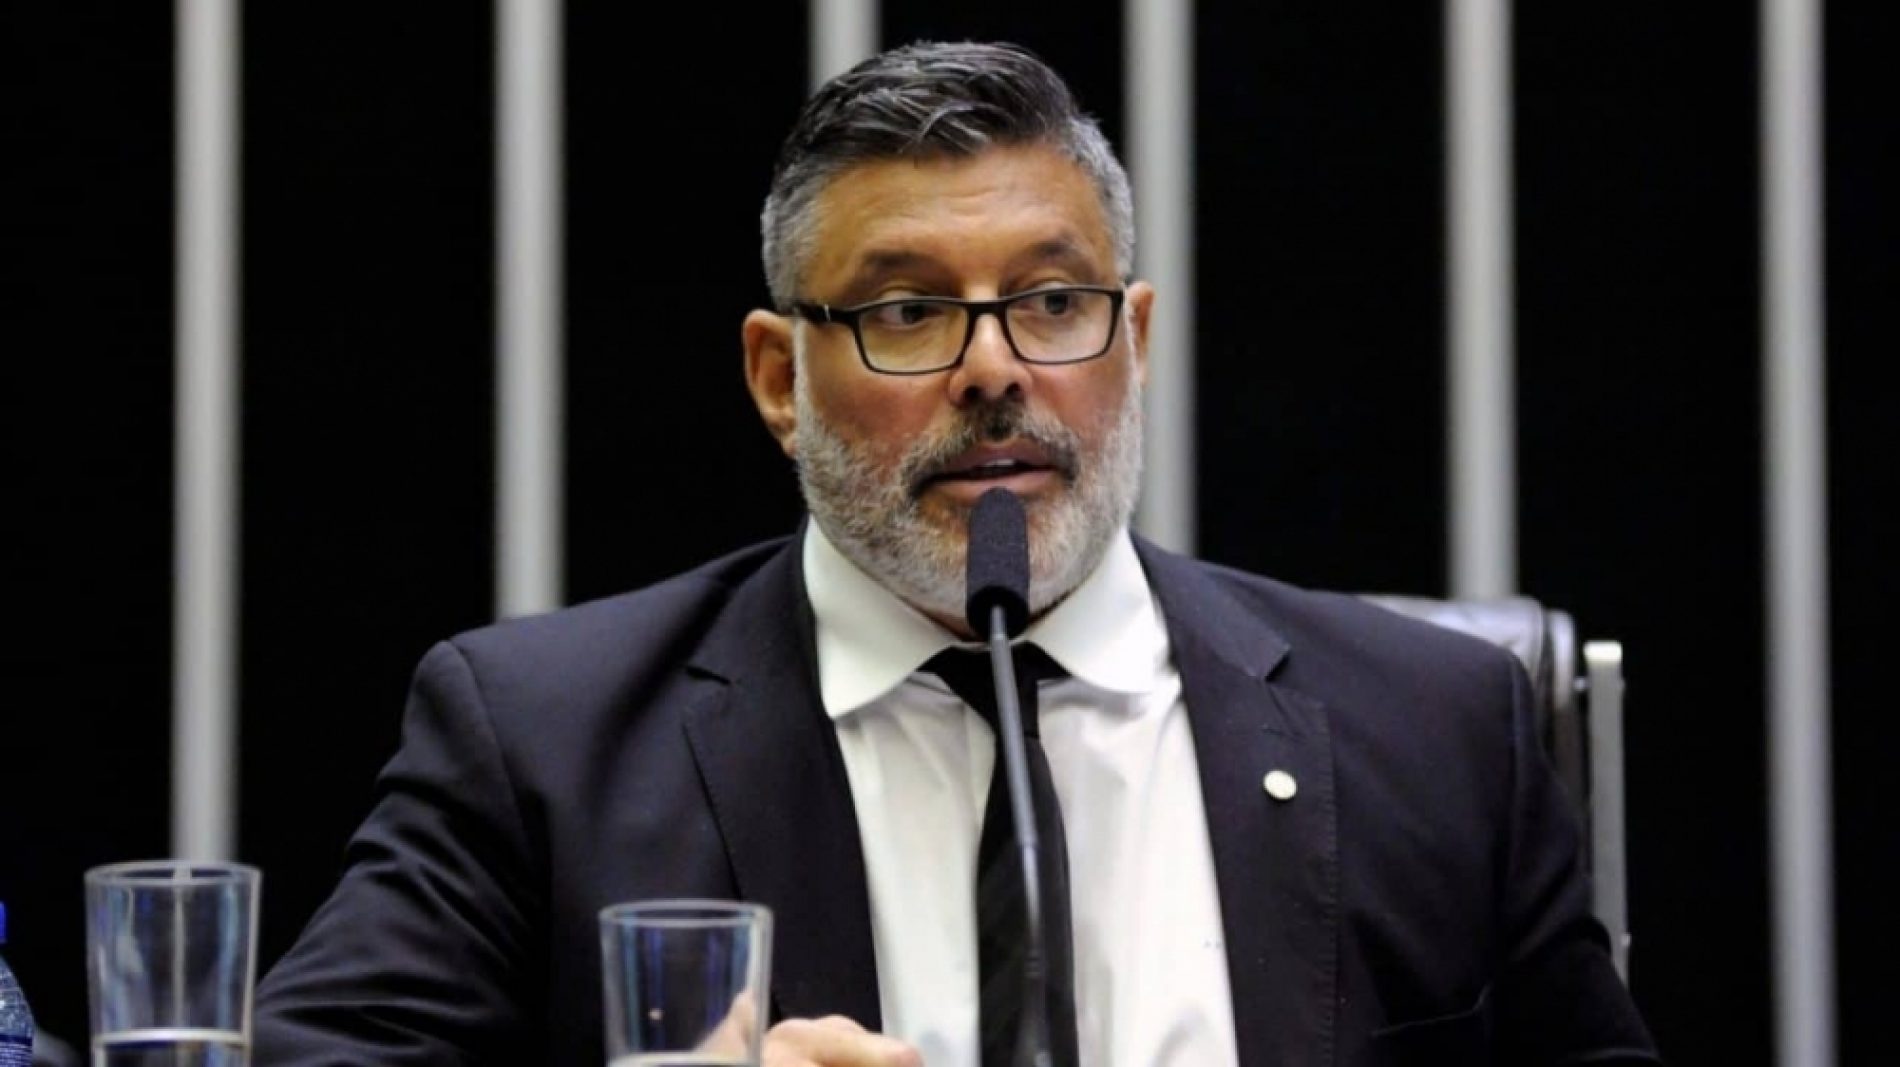 POLITICA: PSL expulsa deputado federal Alexandre Frota